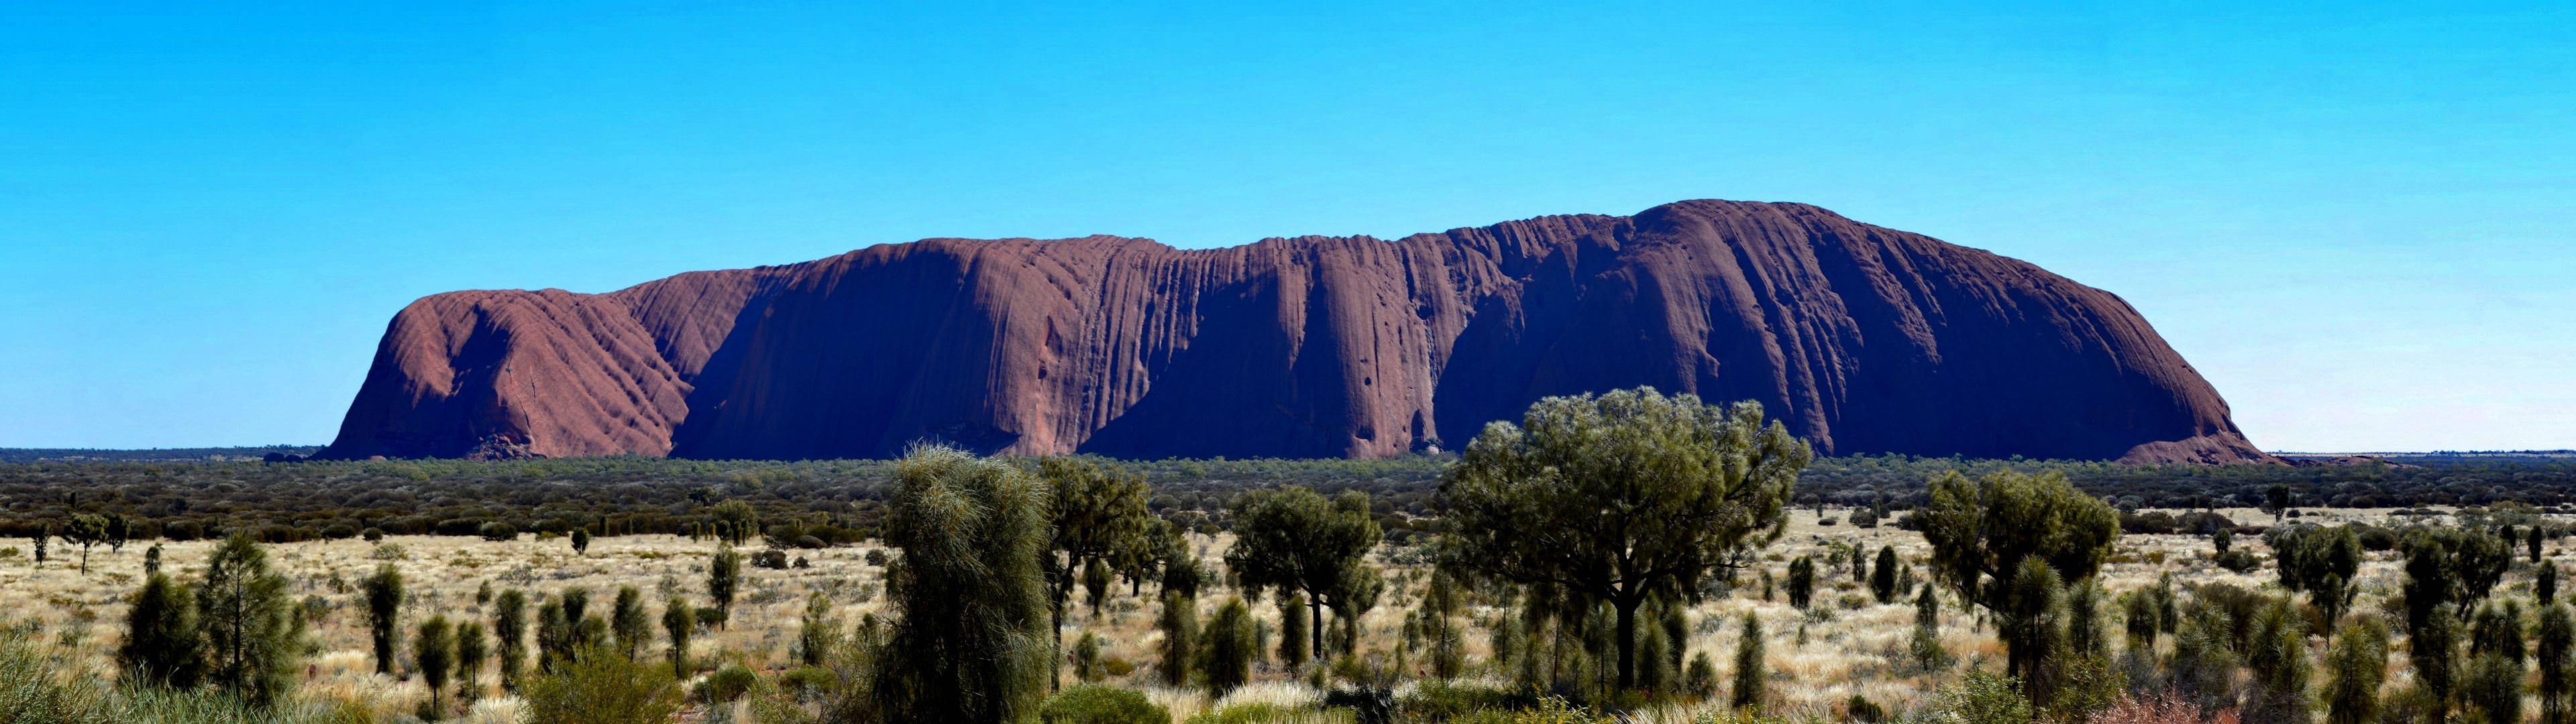 Uluru wallpaper, Captivating image, Mesmerizing beauty, 3840x1080 Dual Screen Desktop